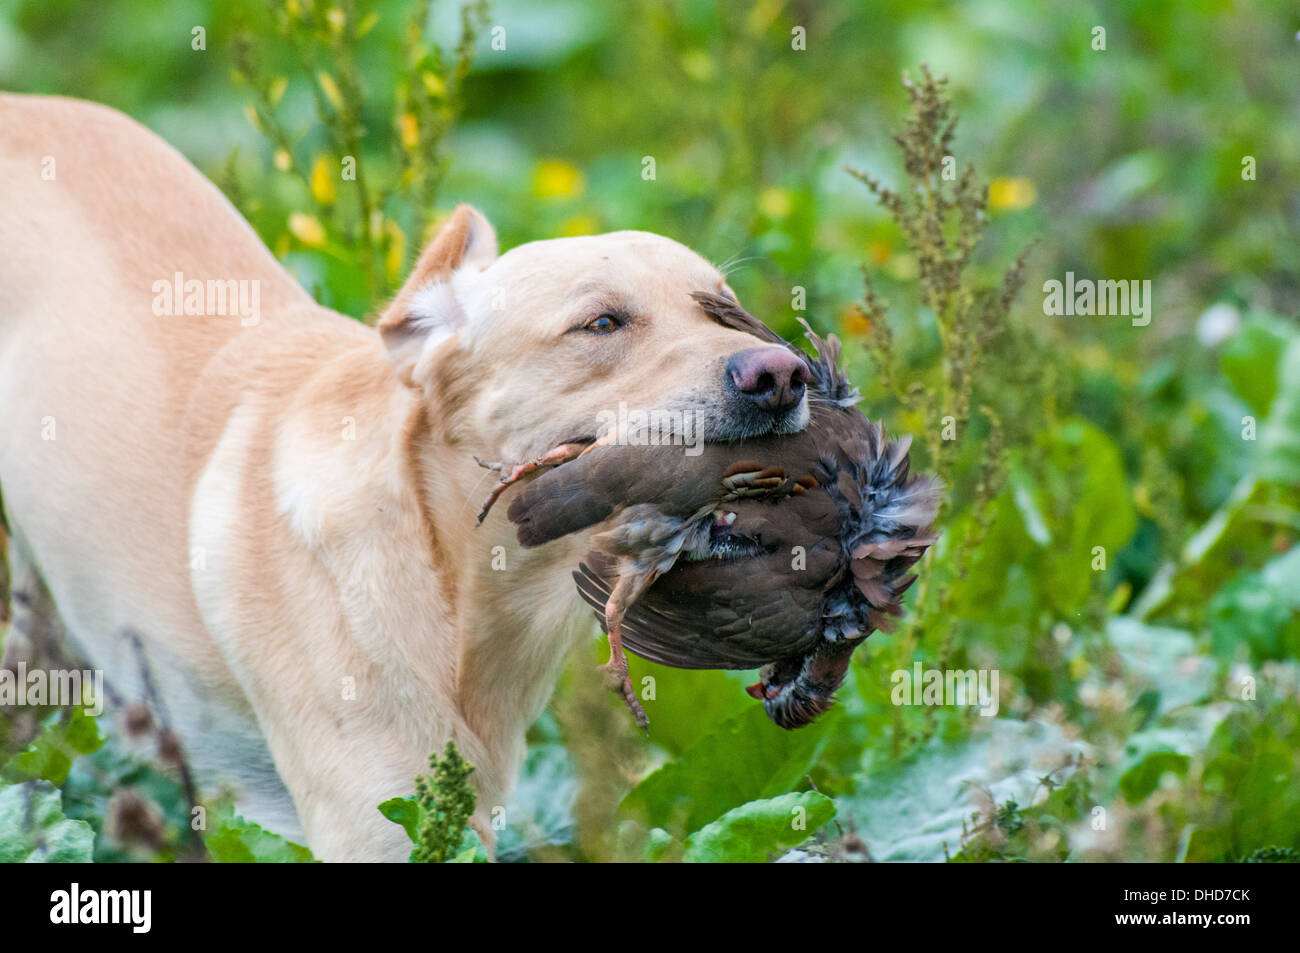 A gun dog, yellow labrador, retrieving a red partridge at a gun dog training day in field of sugar beet Stock Photo